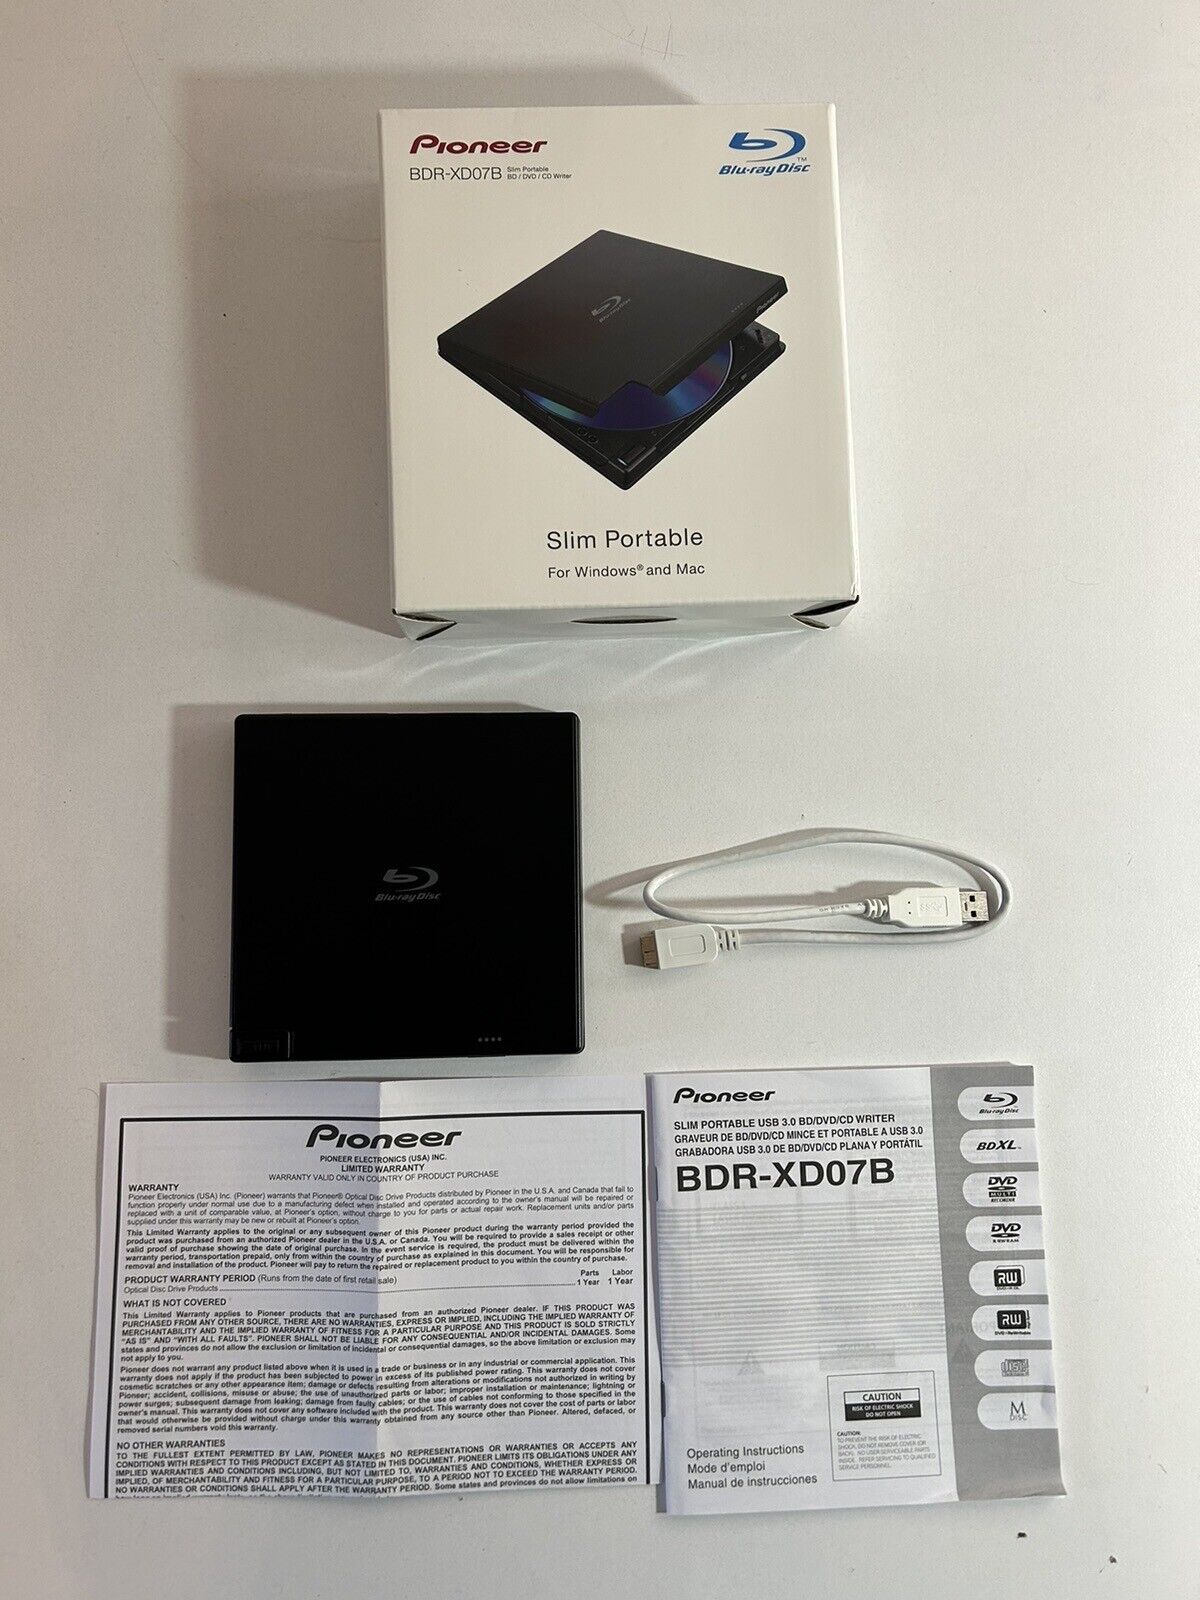 Pioneer BDR-XD07B 6x Slim Portable USB 3.0 BD/DVD/CD Burner Open Box